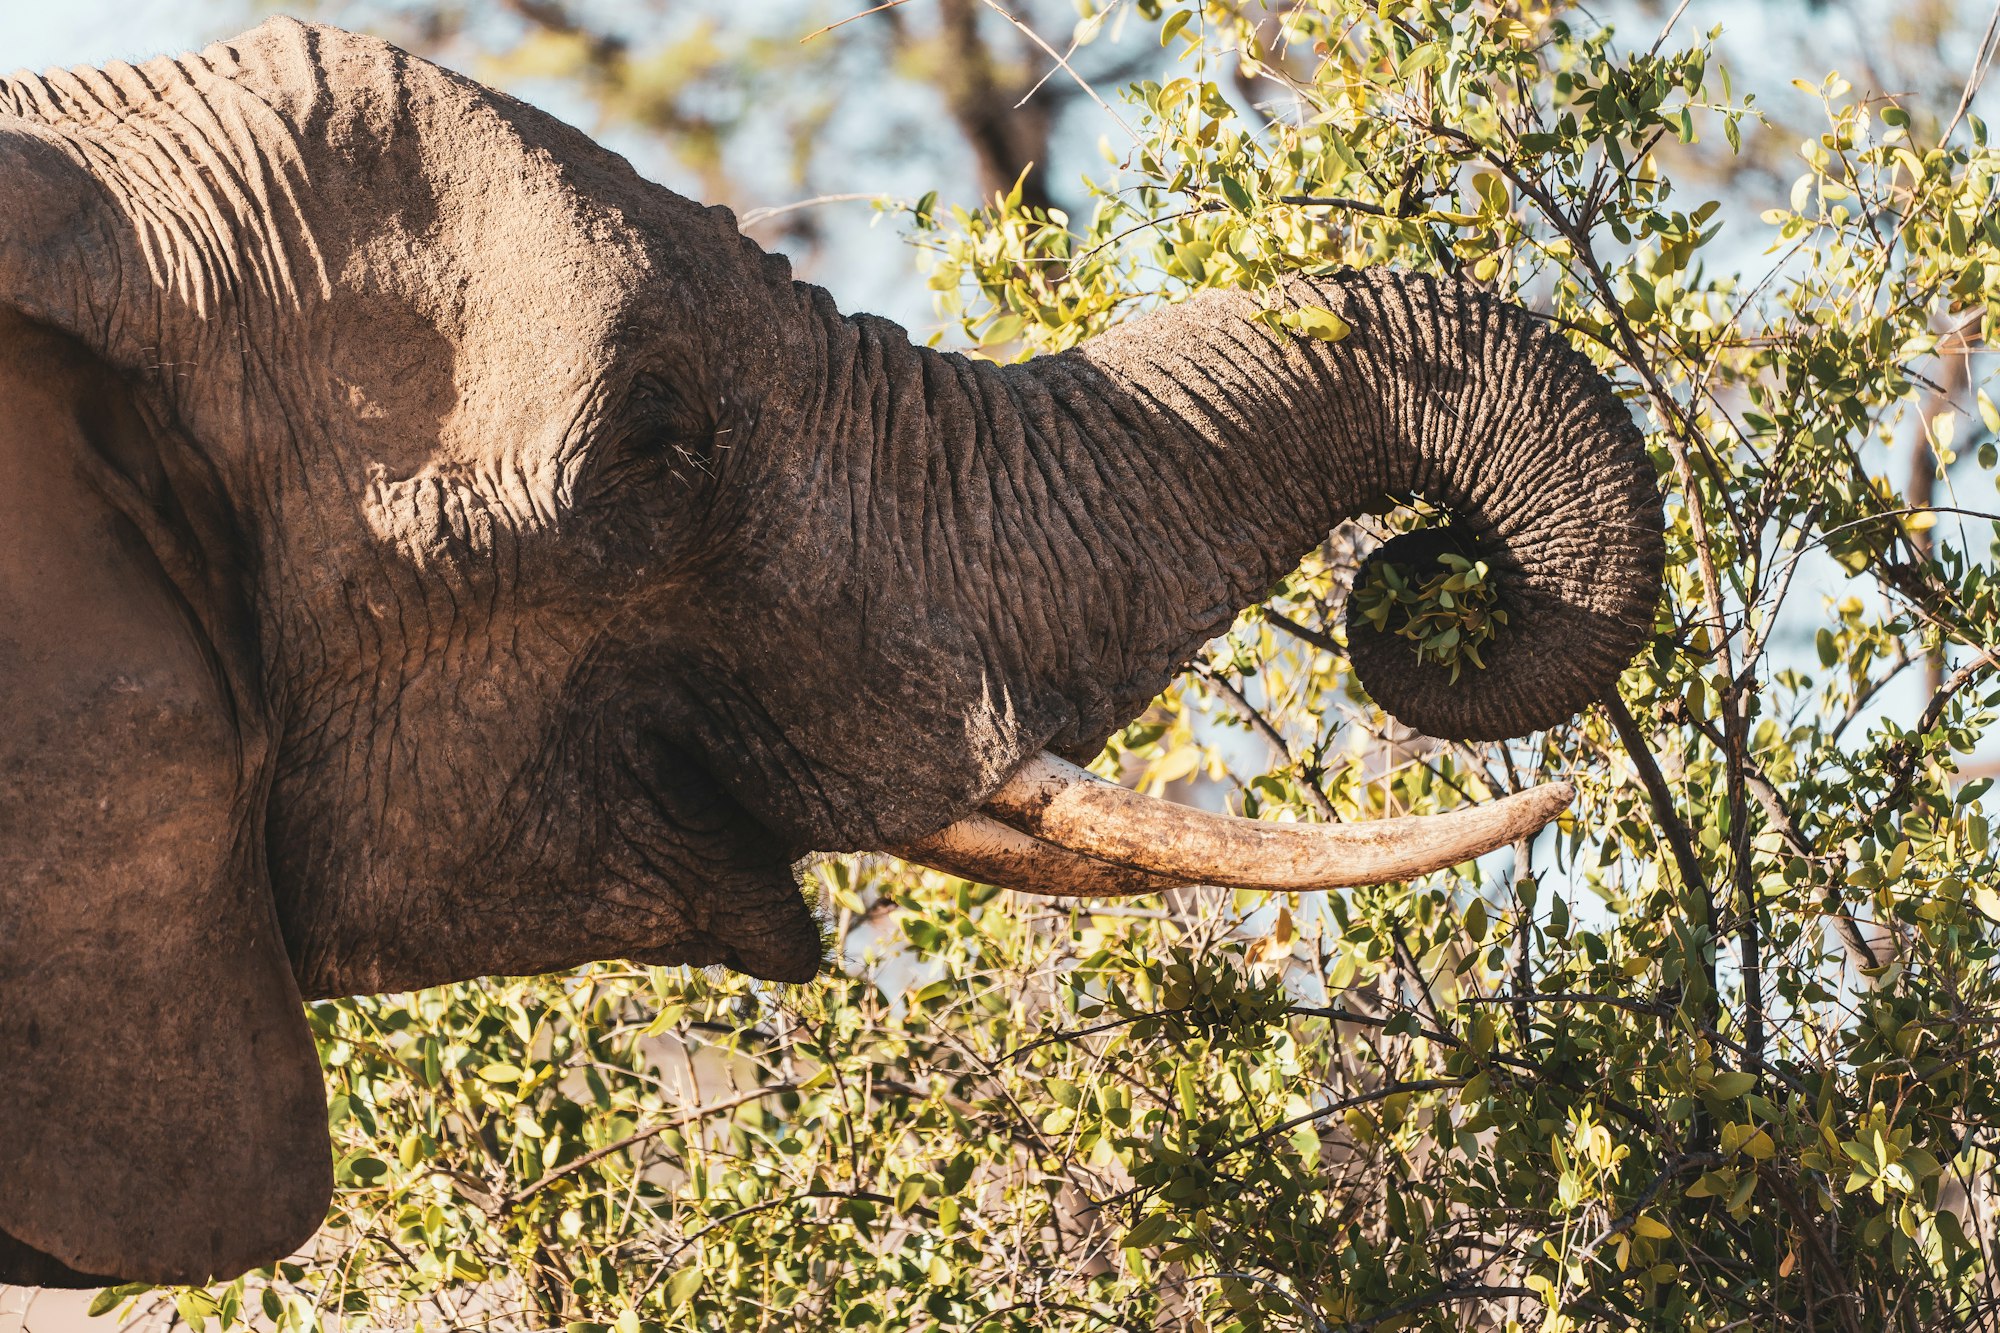 Namibian wildlife in their natural habitat. February 2020.